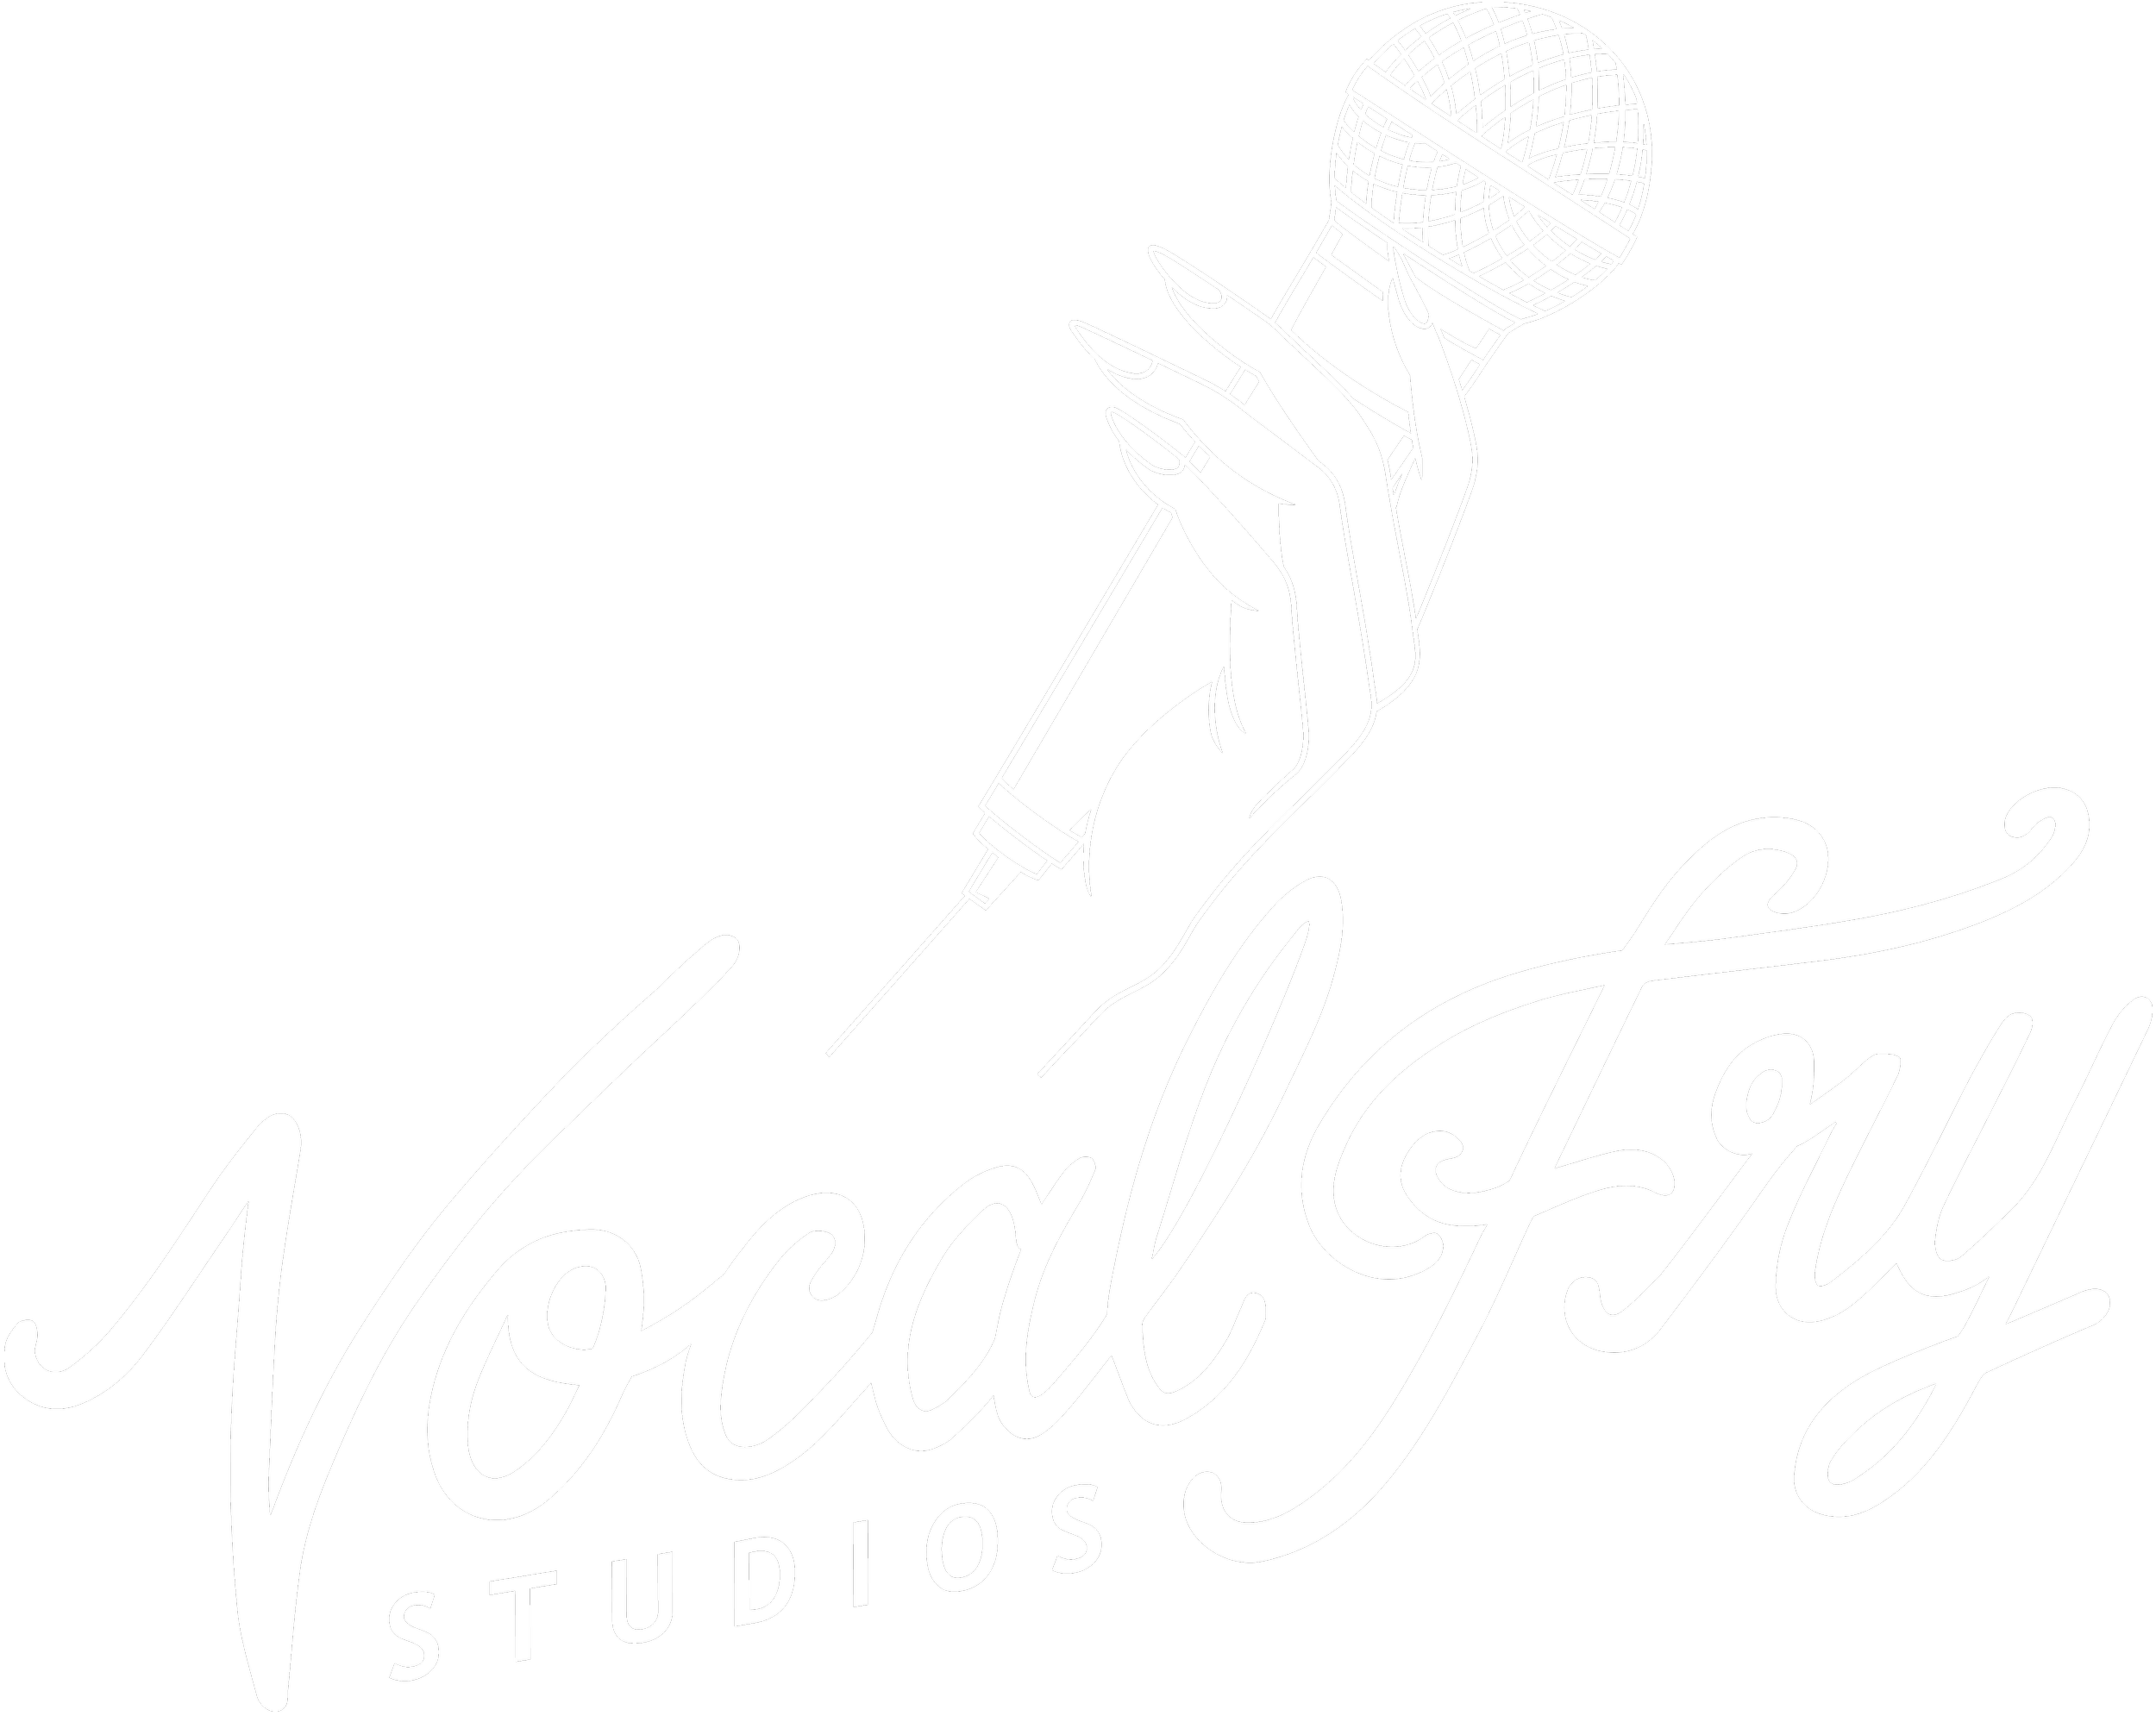 Vocal Fry Studios